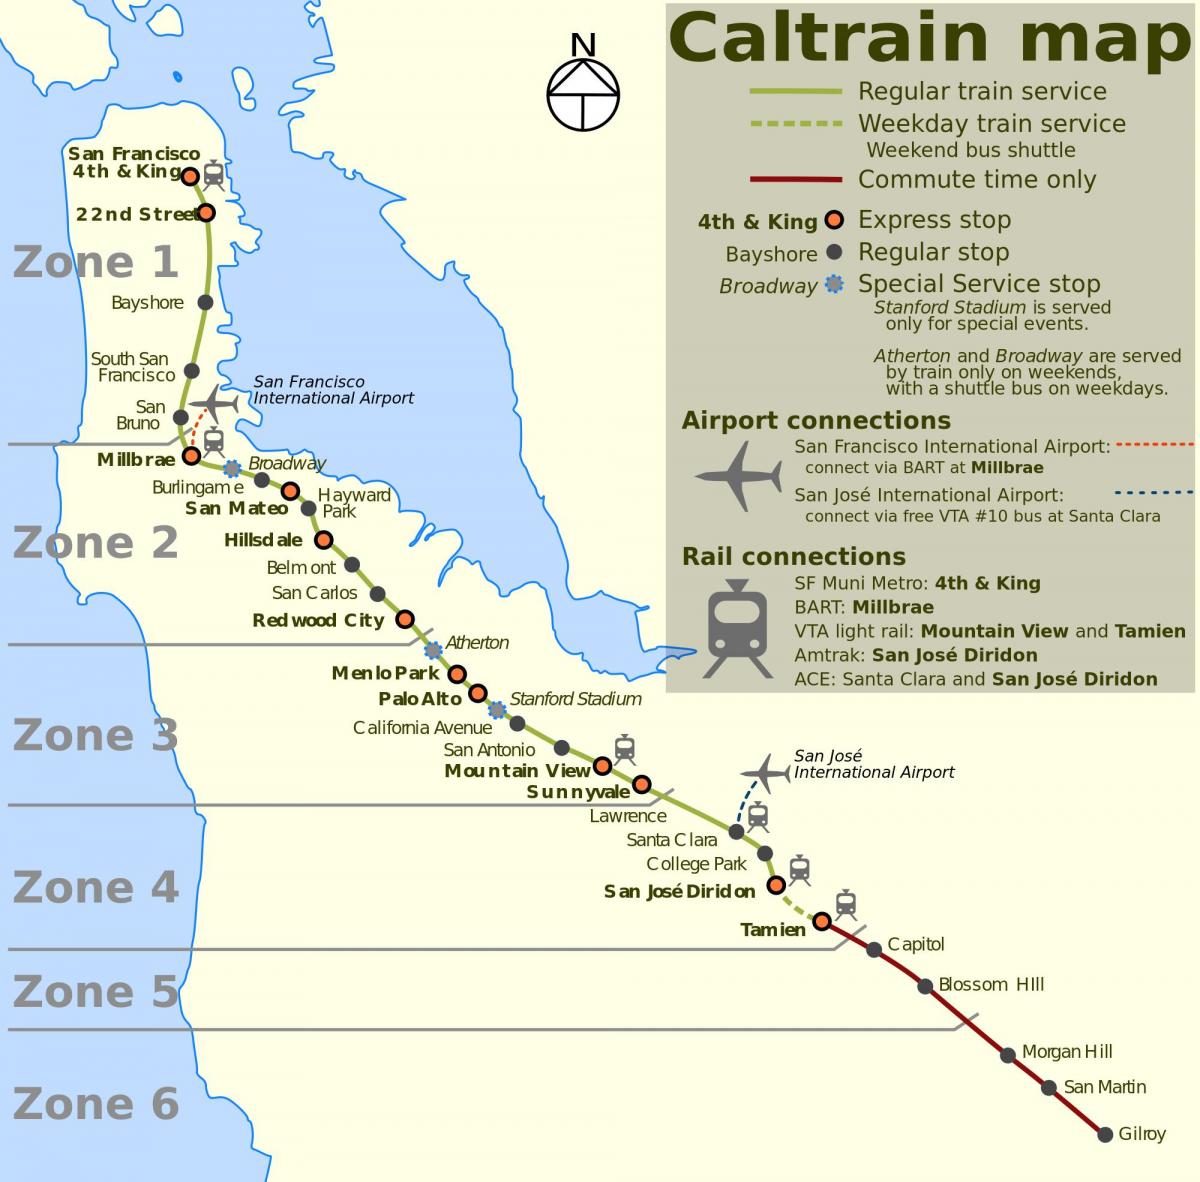 San Francisco caltrain karte